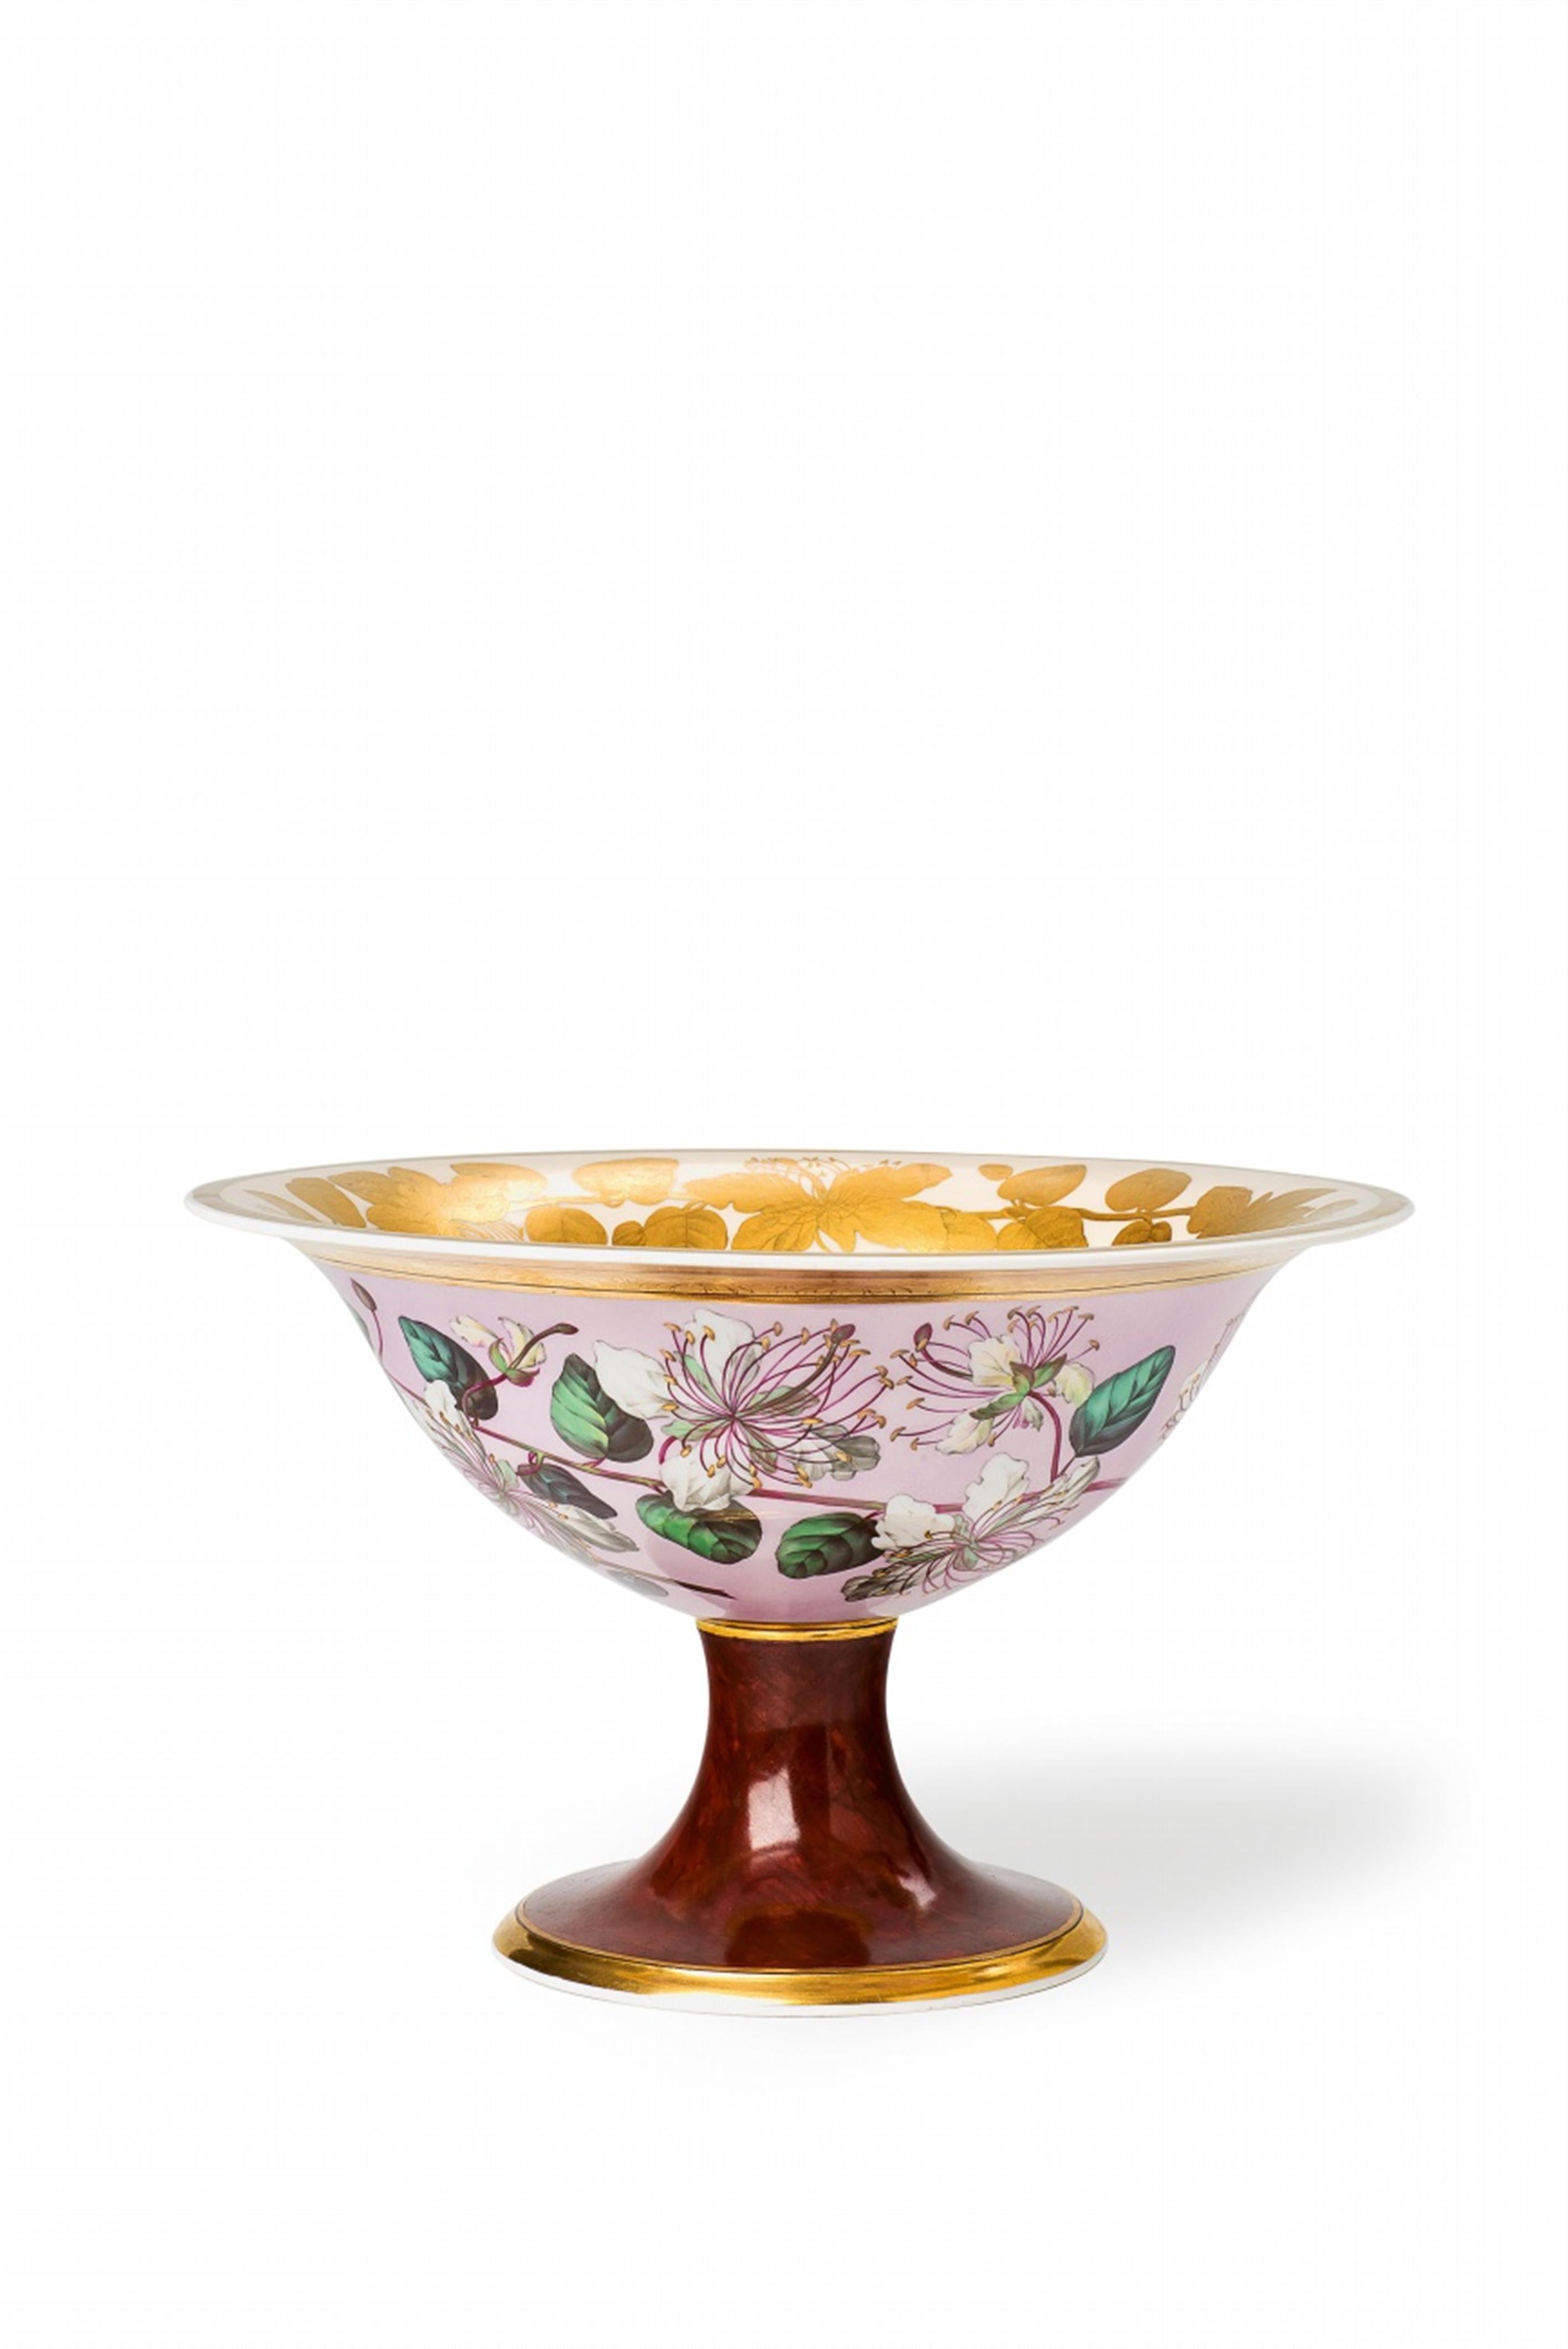 A Royal Berlin KPM porcelain footed bowl with botanical decor - image-1